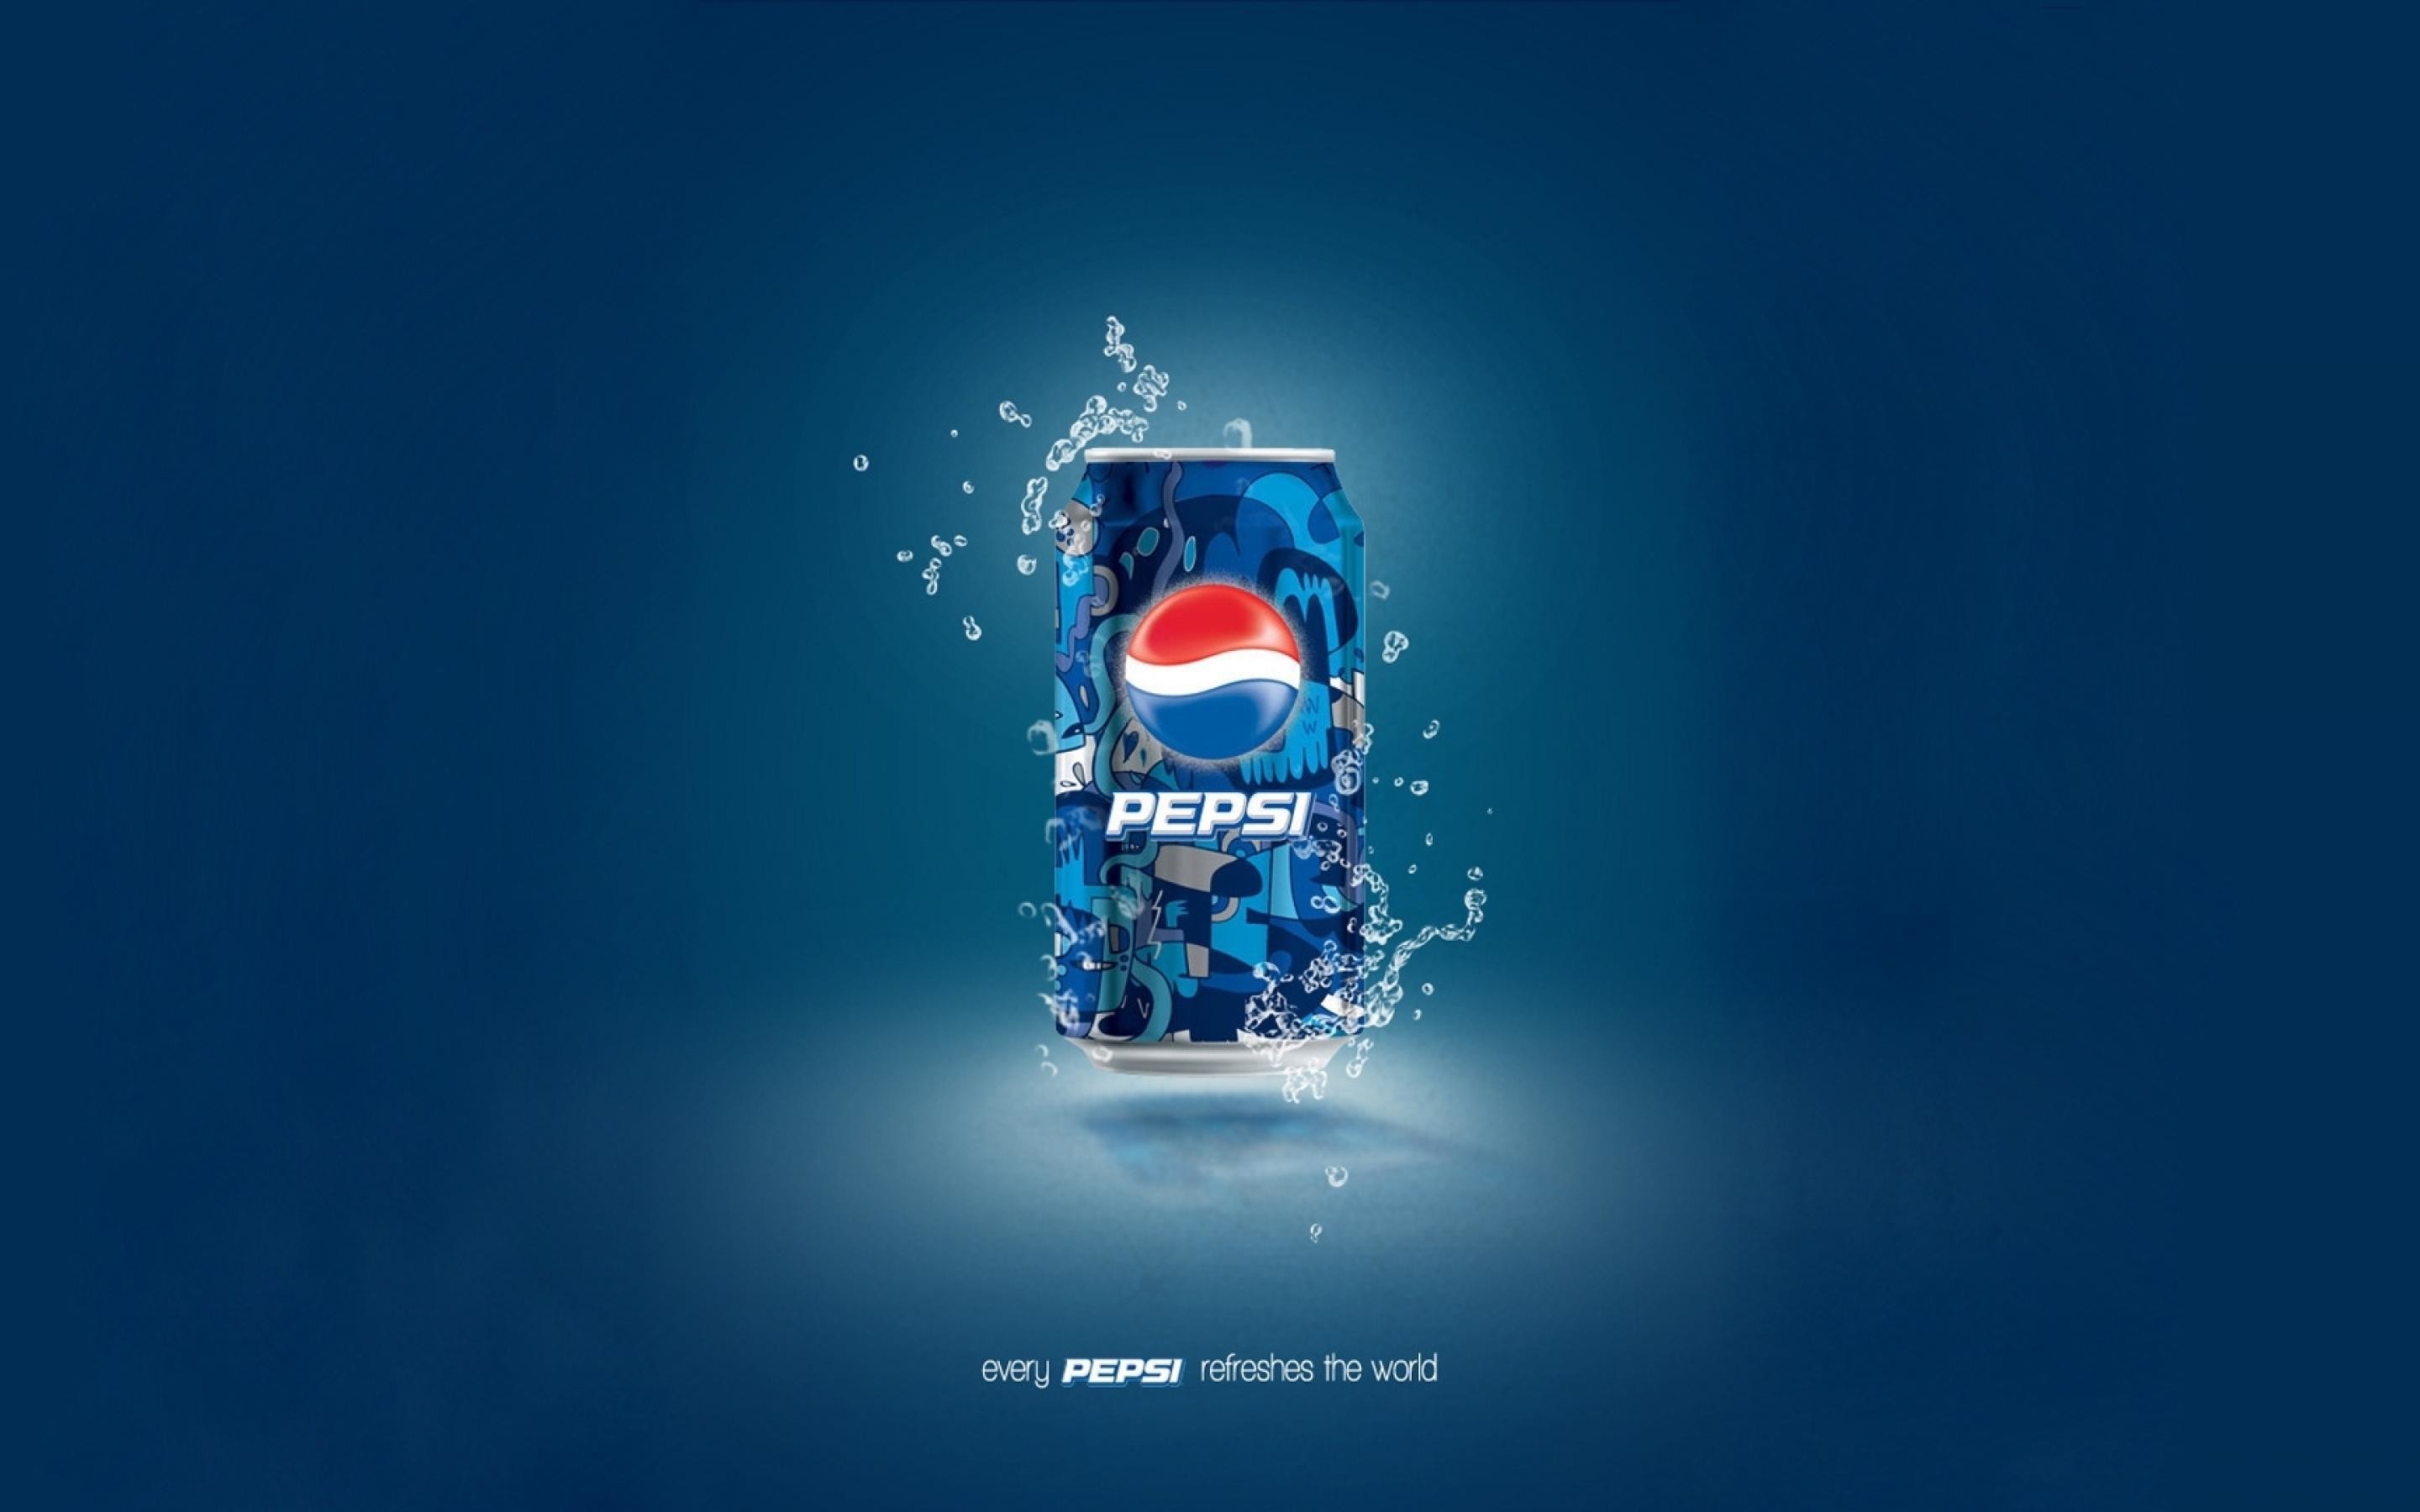 2880x1800 Pepsi Wallpapers - Full HD wallpaper search